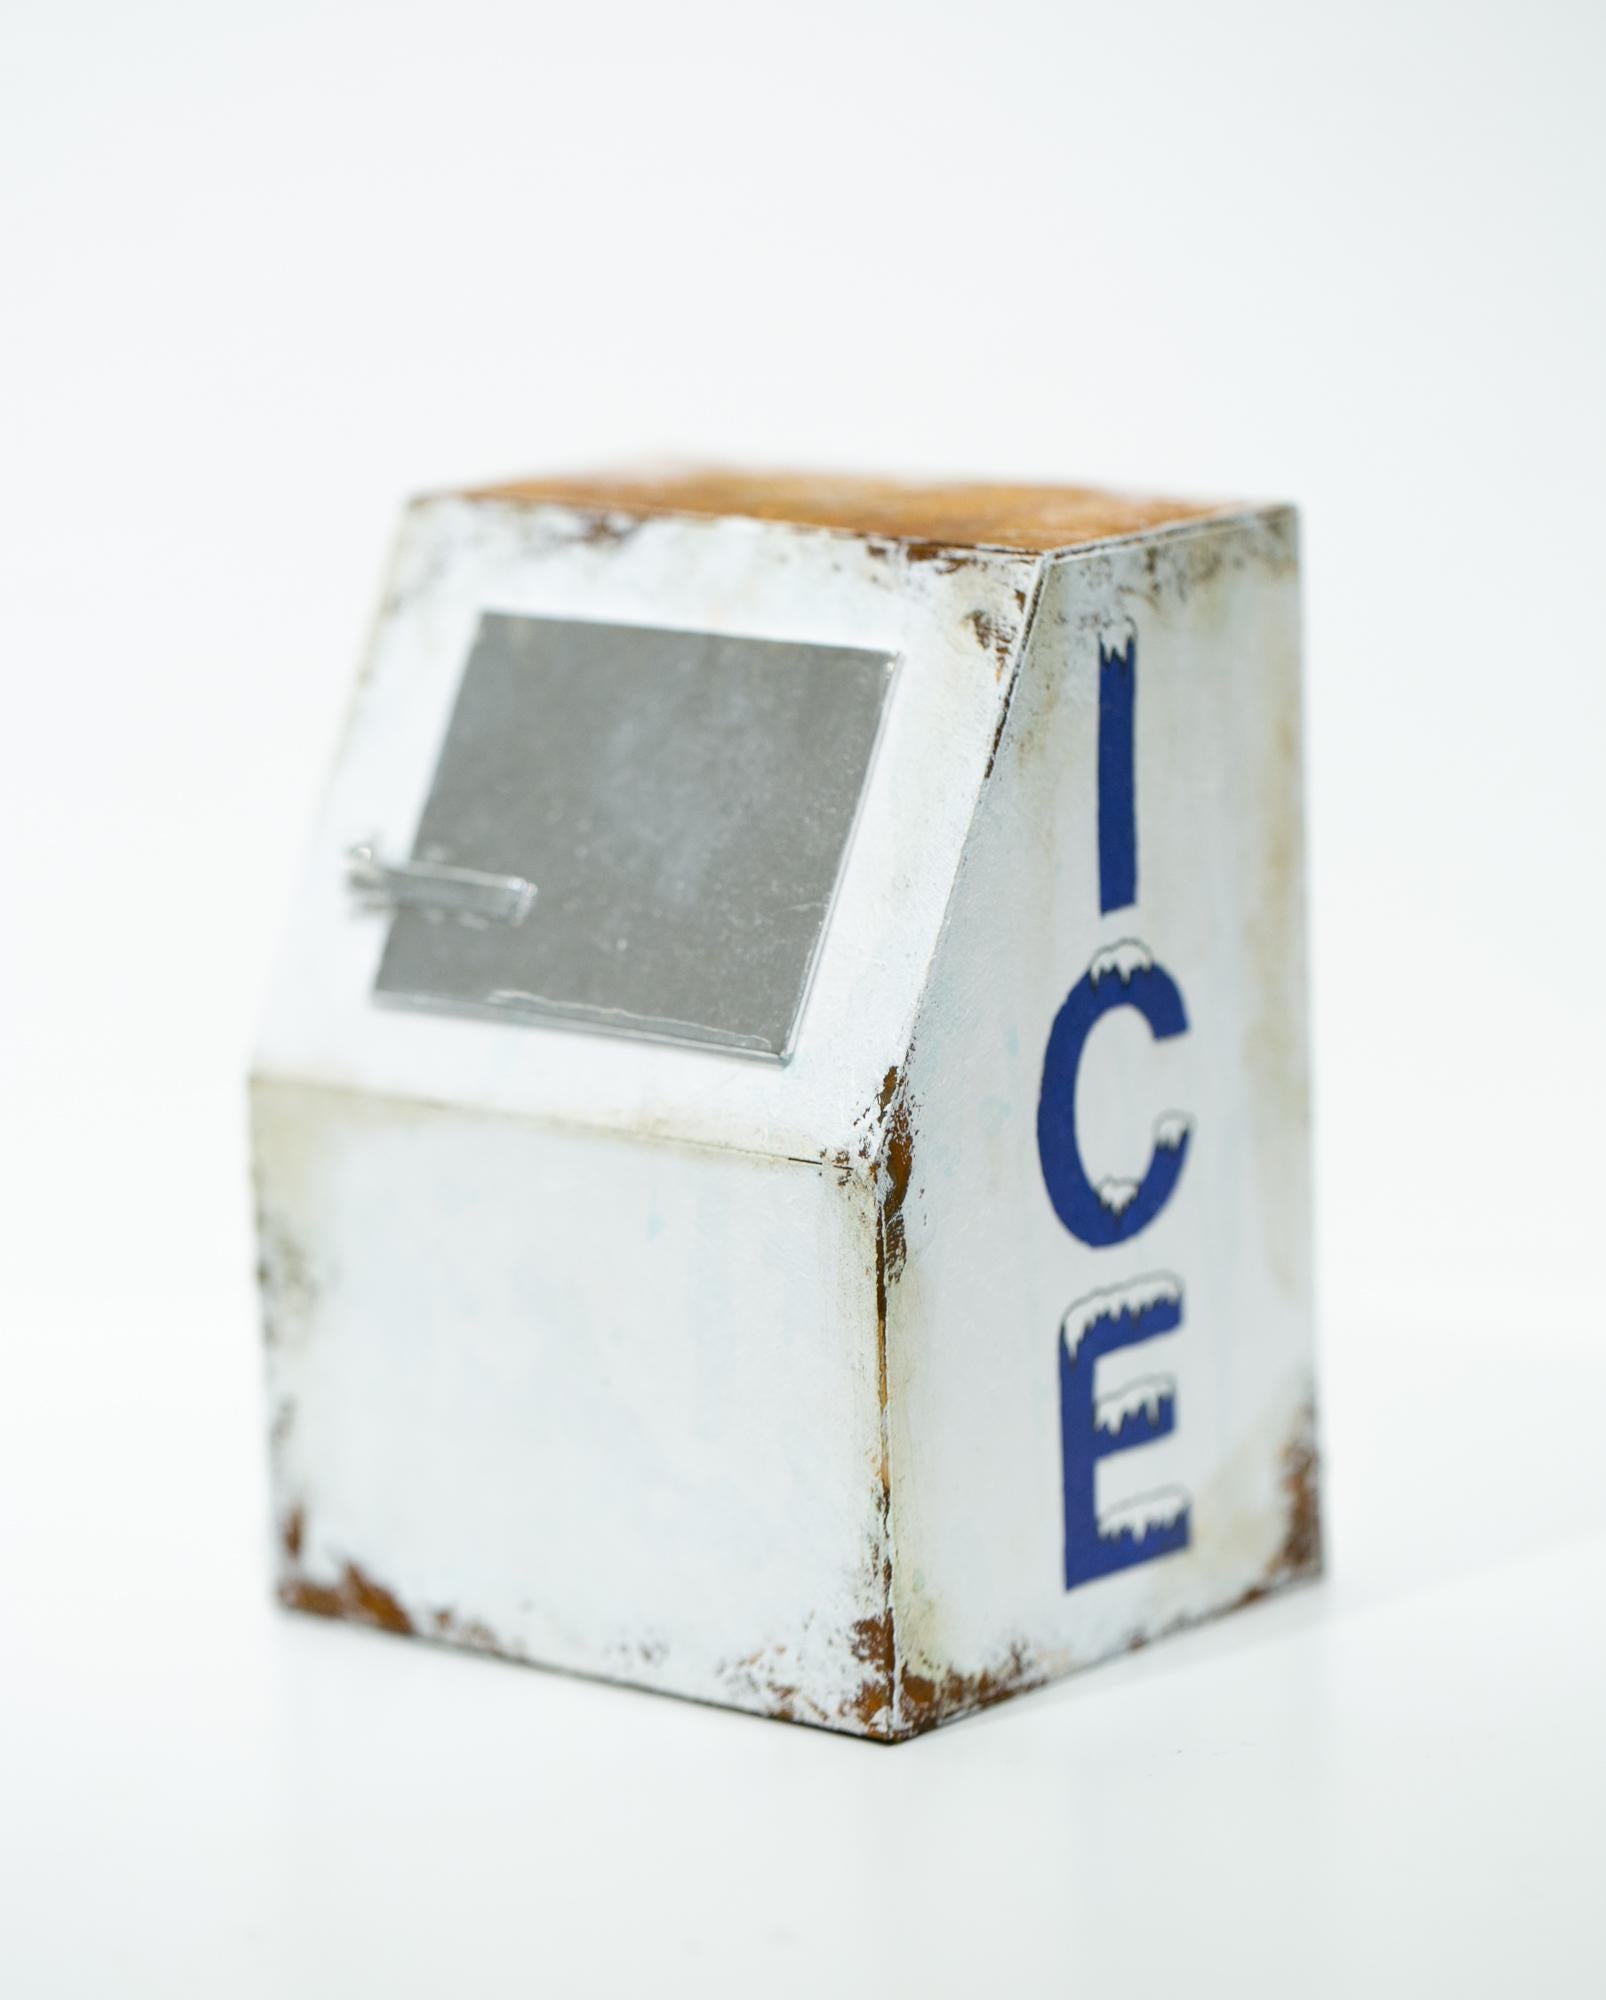 Drew Leshko Still-Life Sculpture – Miniatur, Architektur, Skulptur „Ice Box“, Miniatur